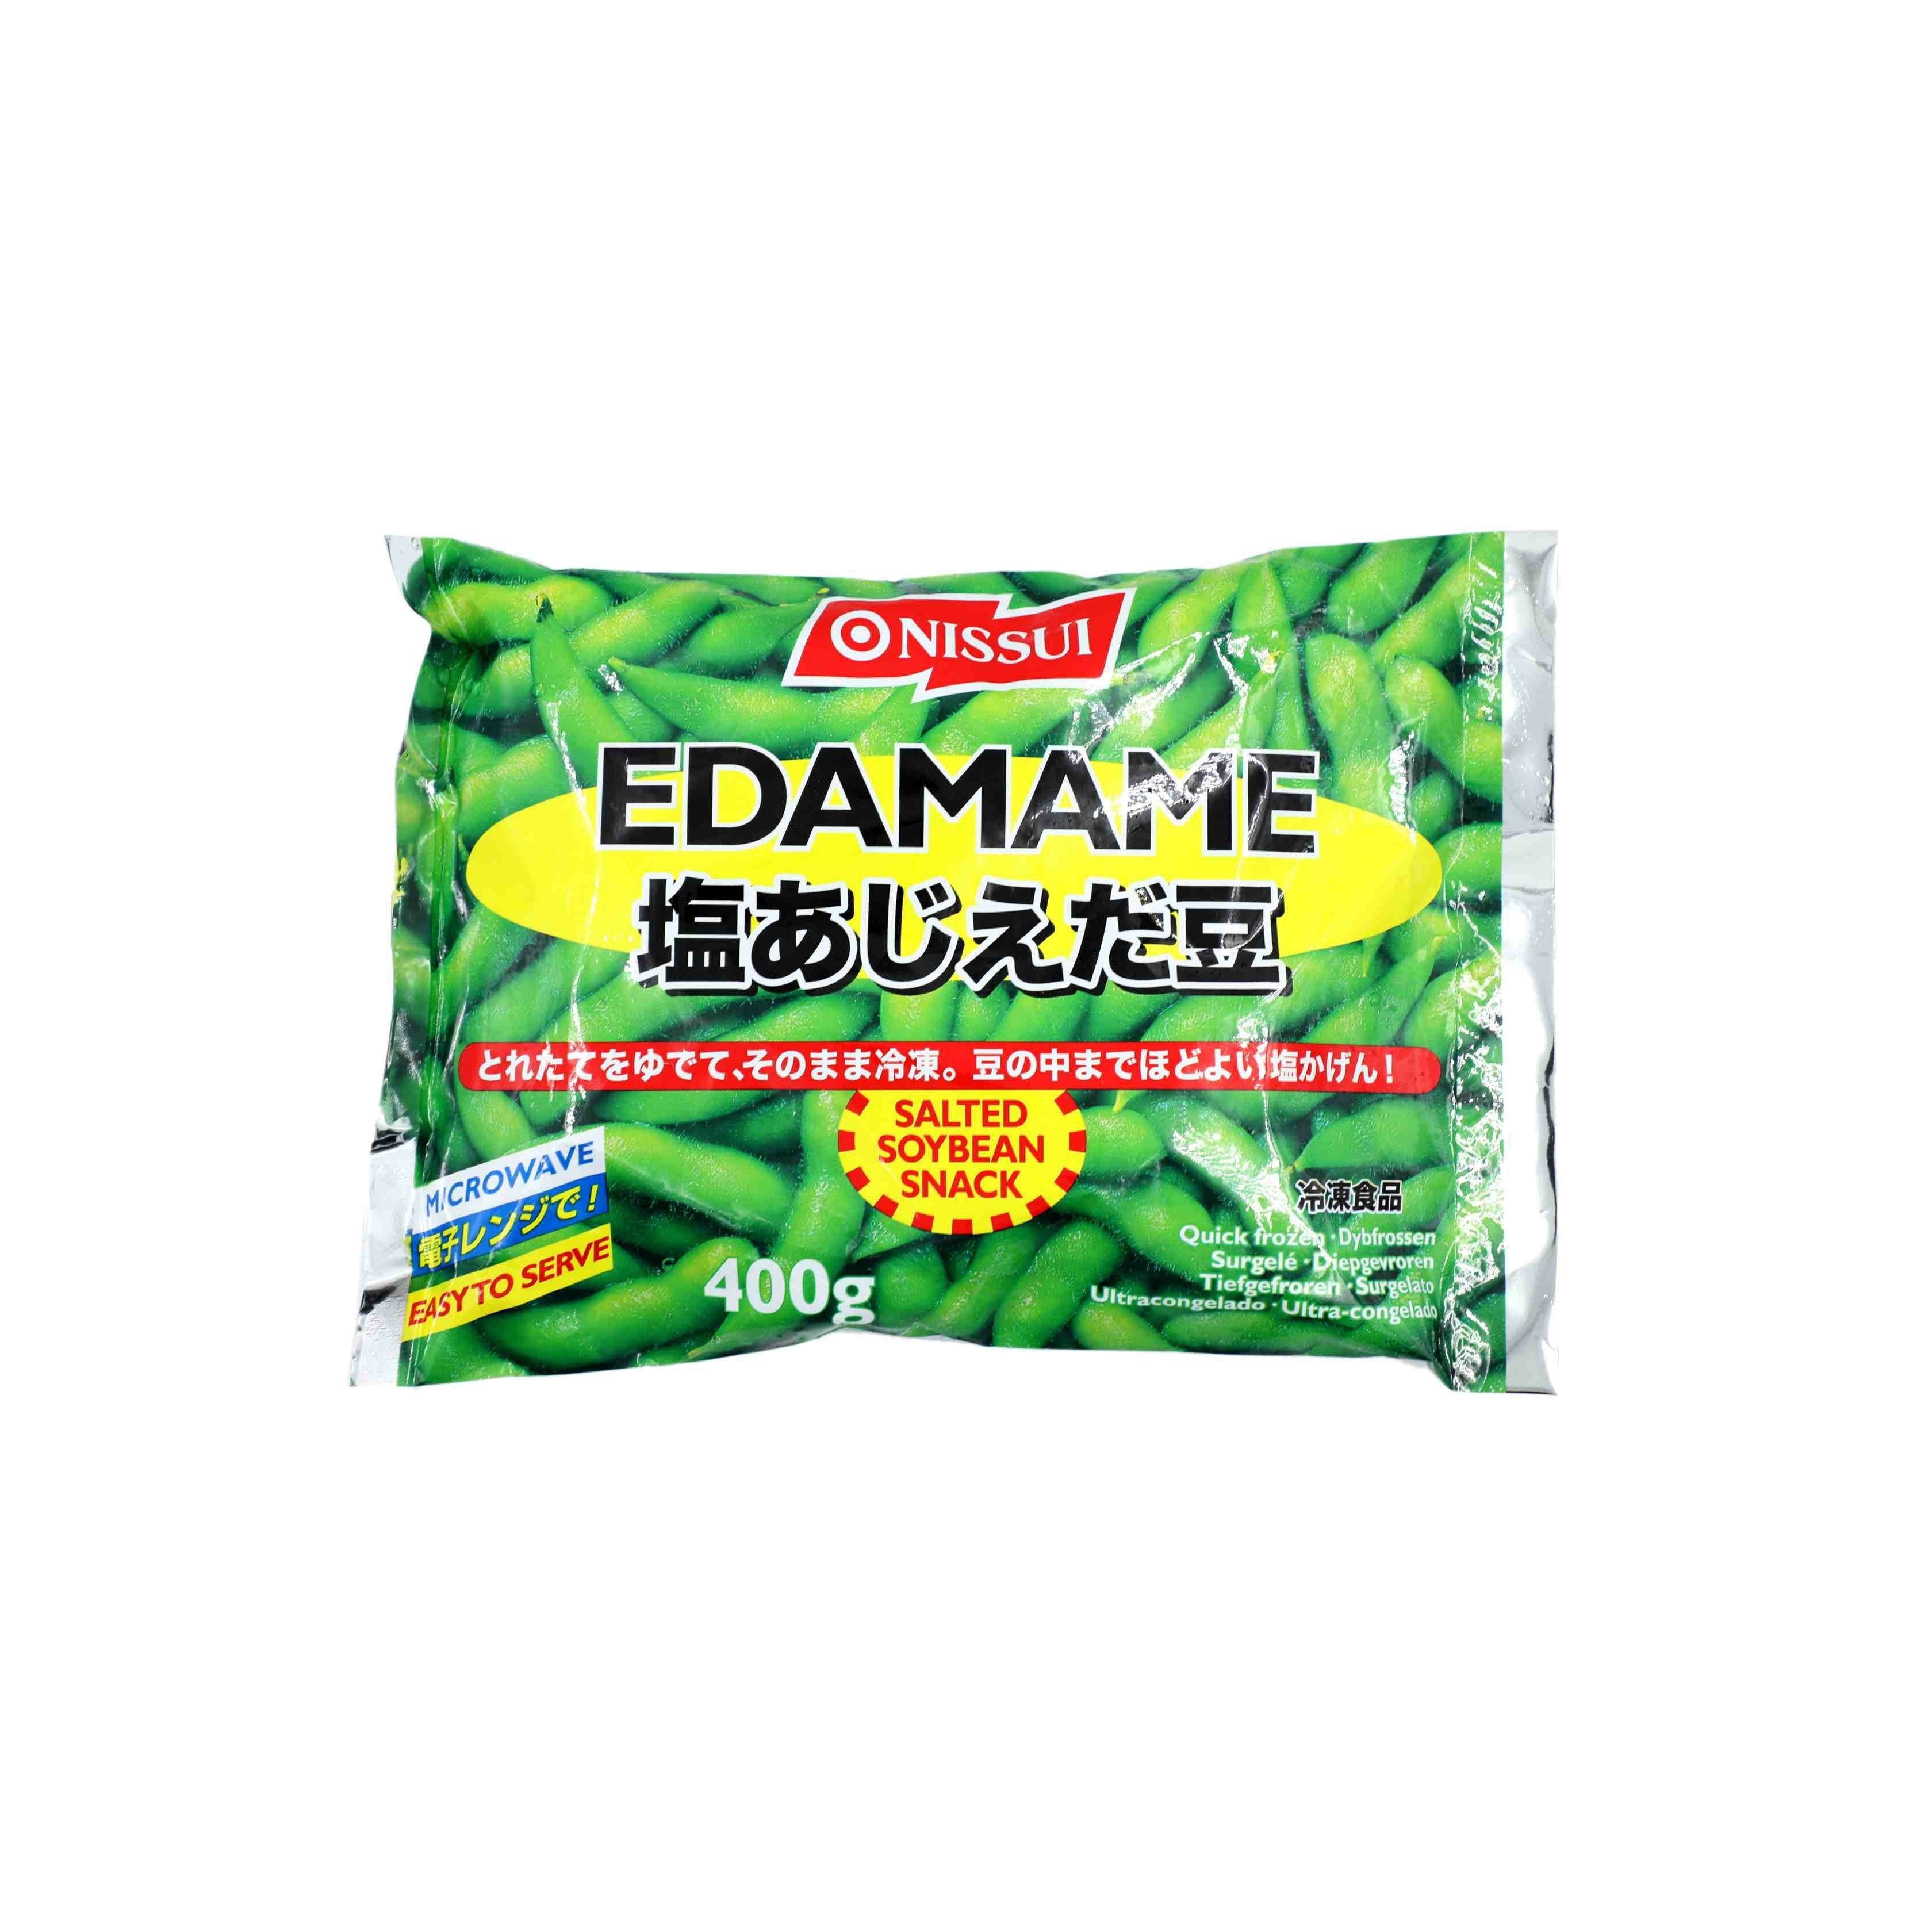 鹽味毛豆 Edamame - Nissui